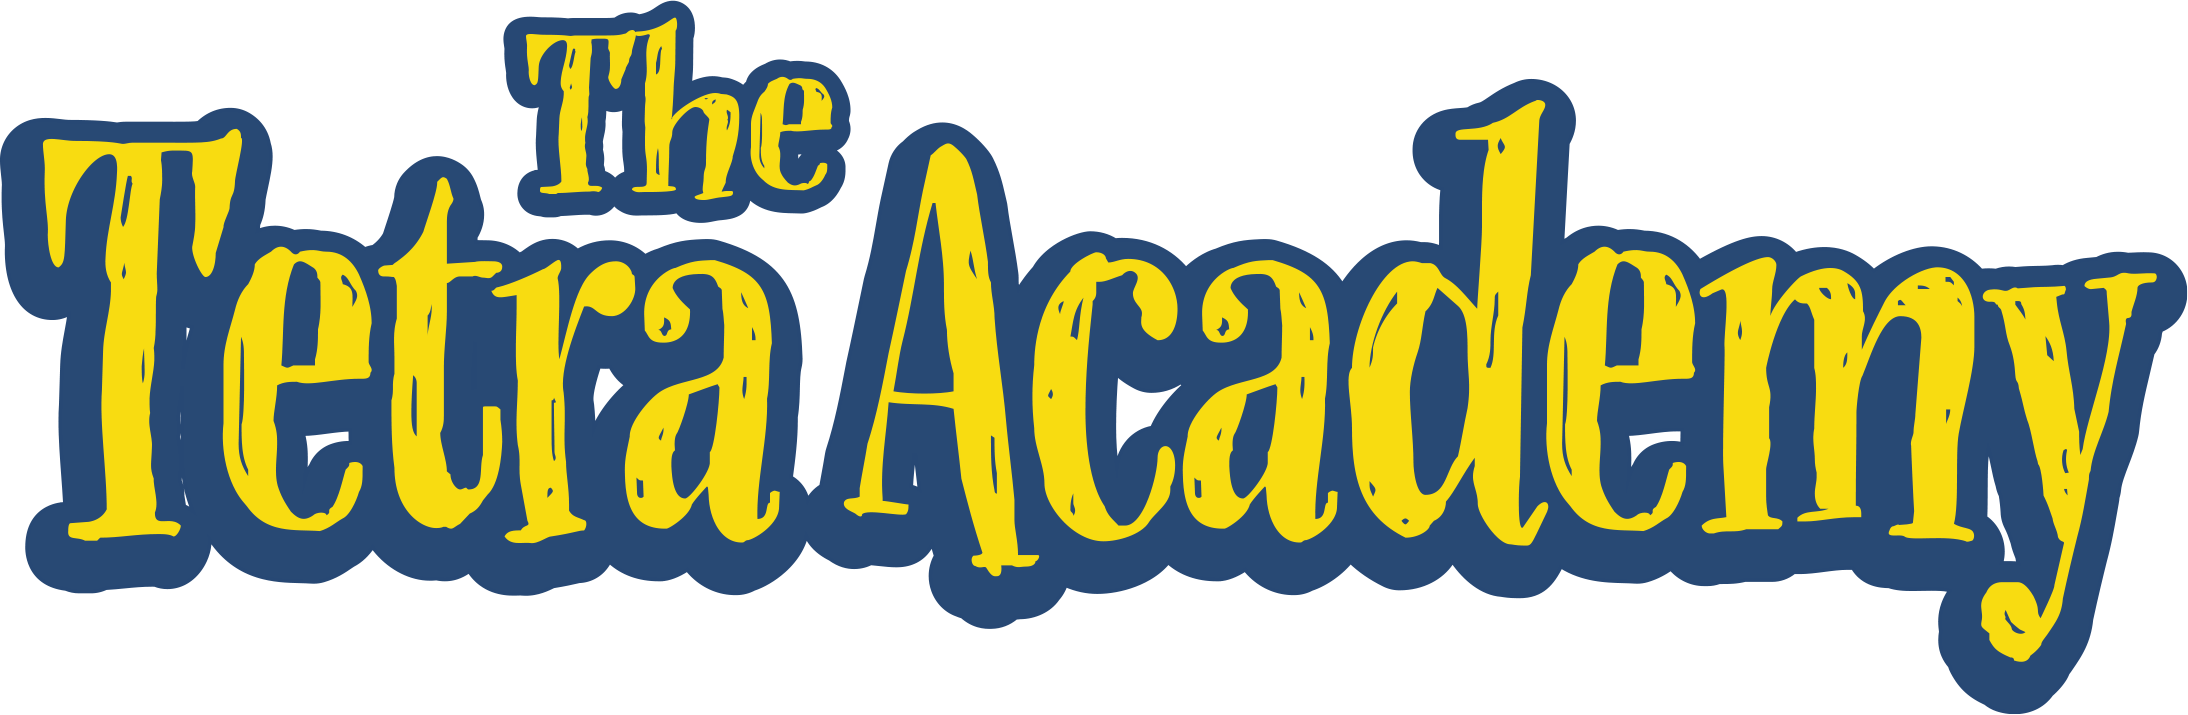 The Tetra Academy